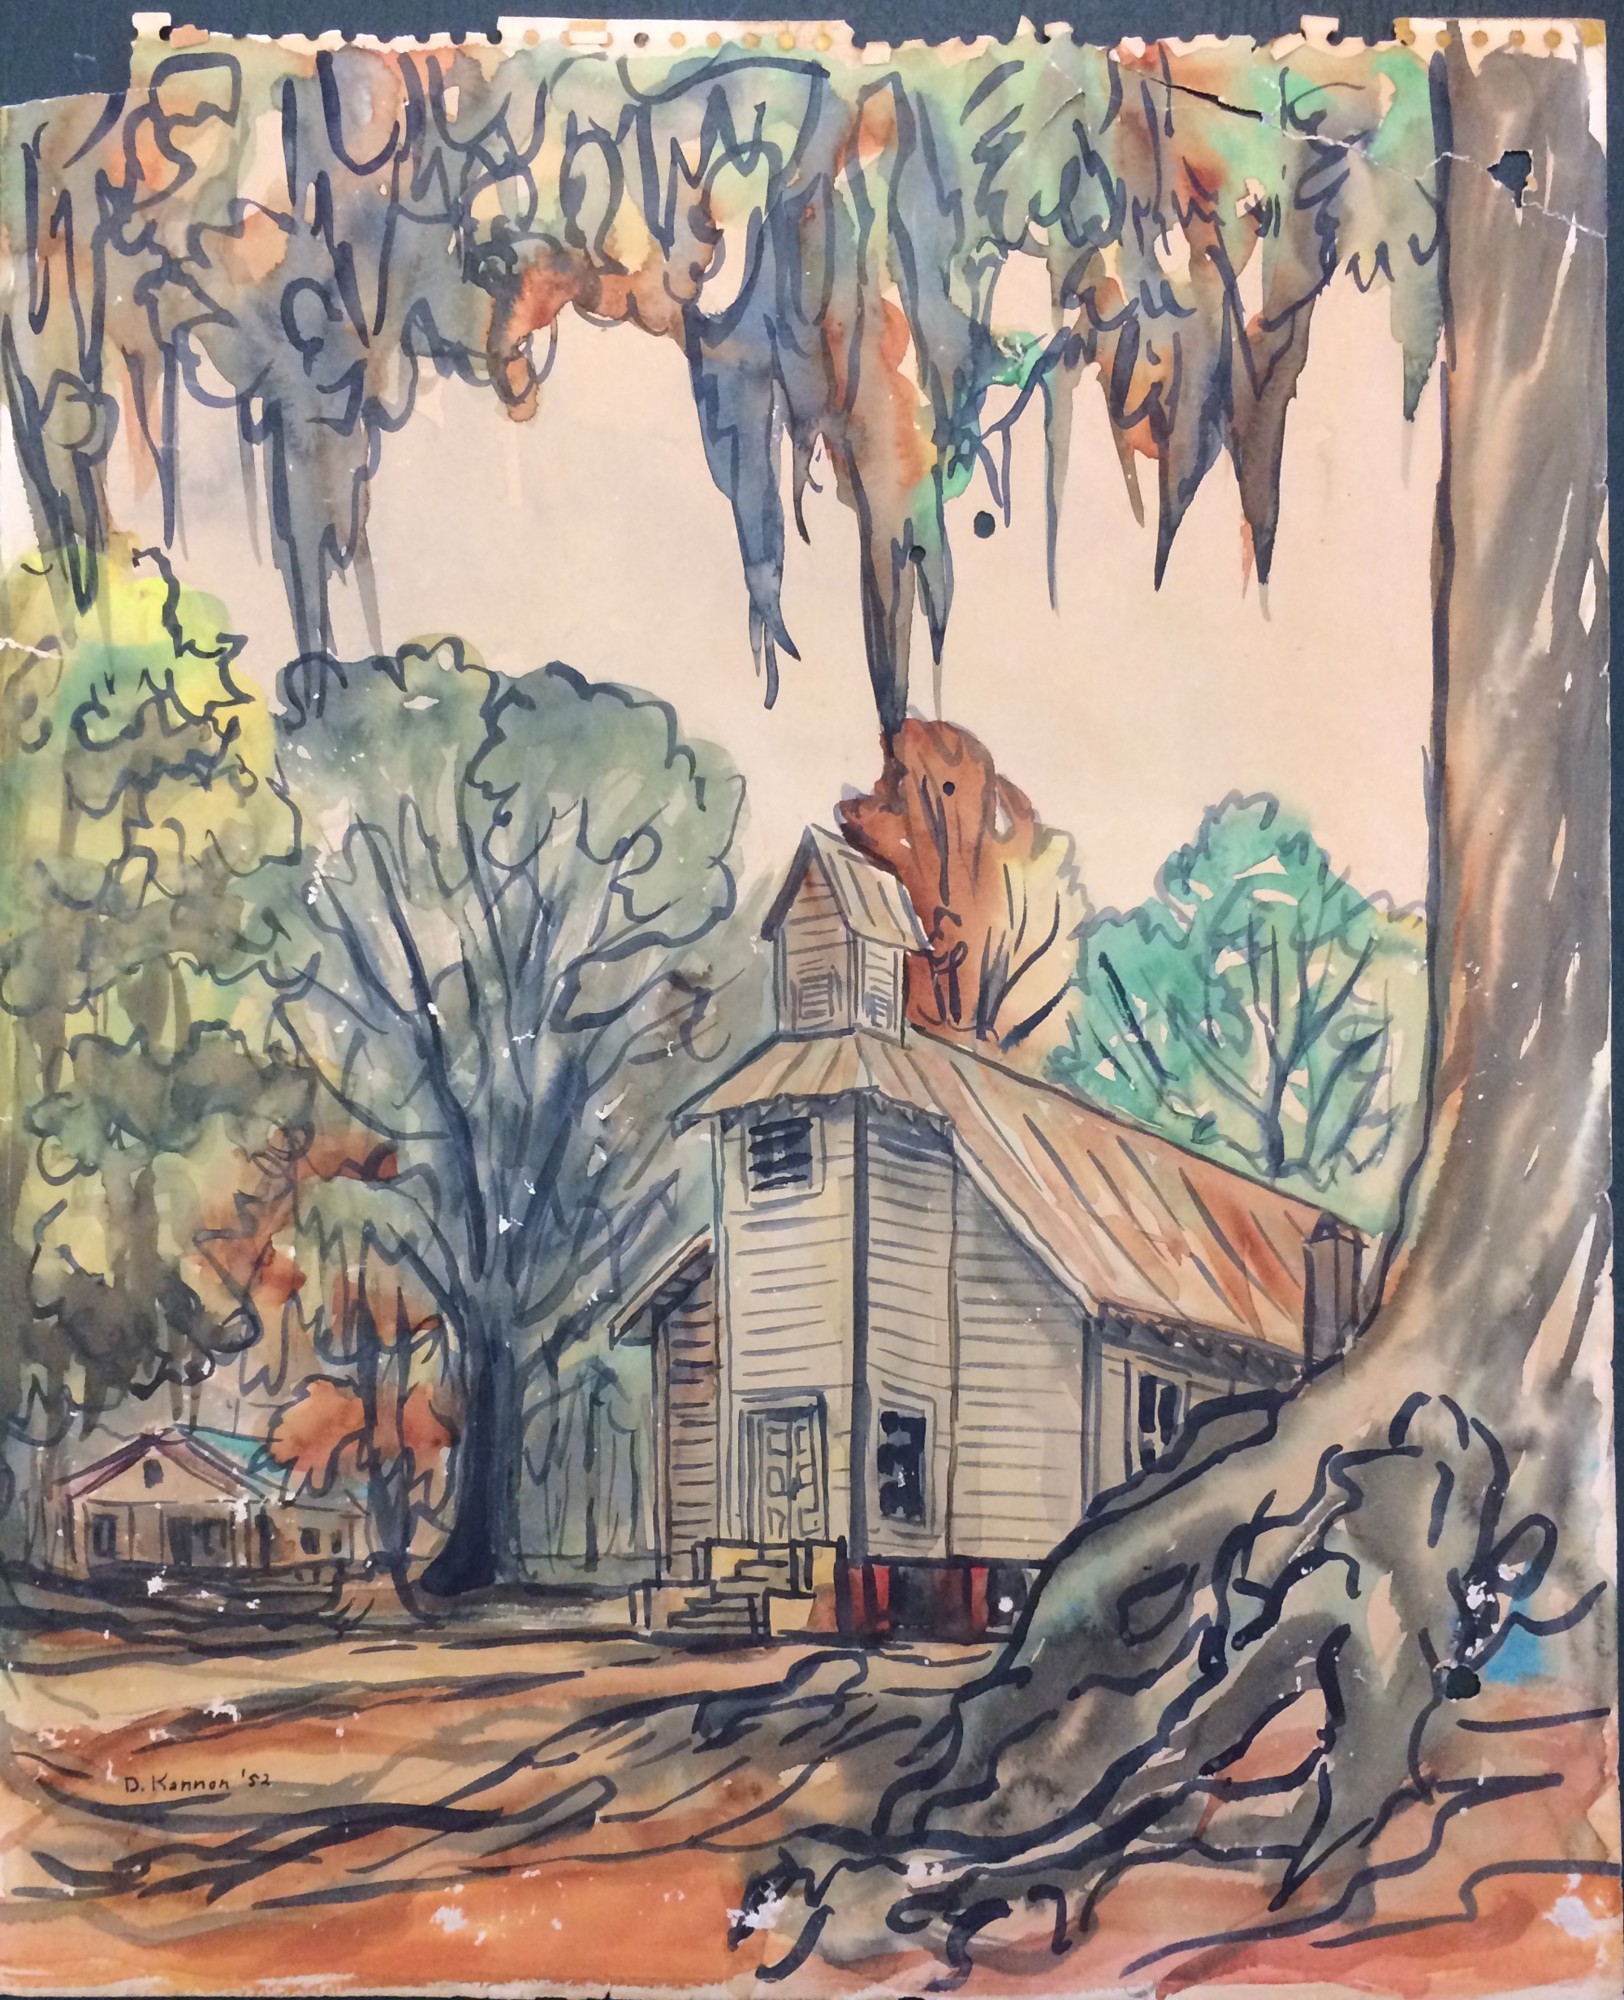 A church in watercolors.